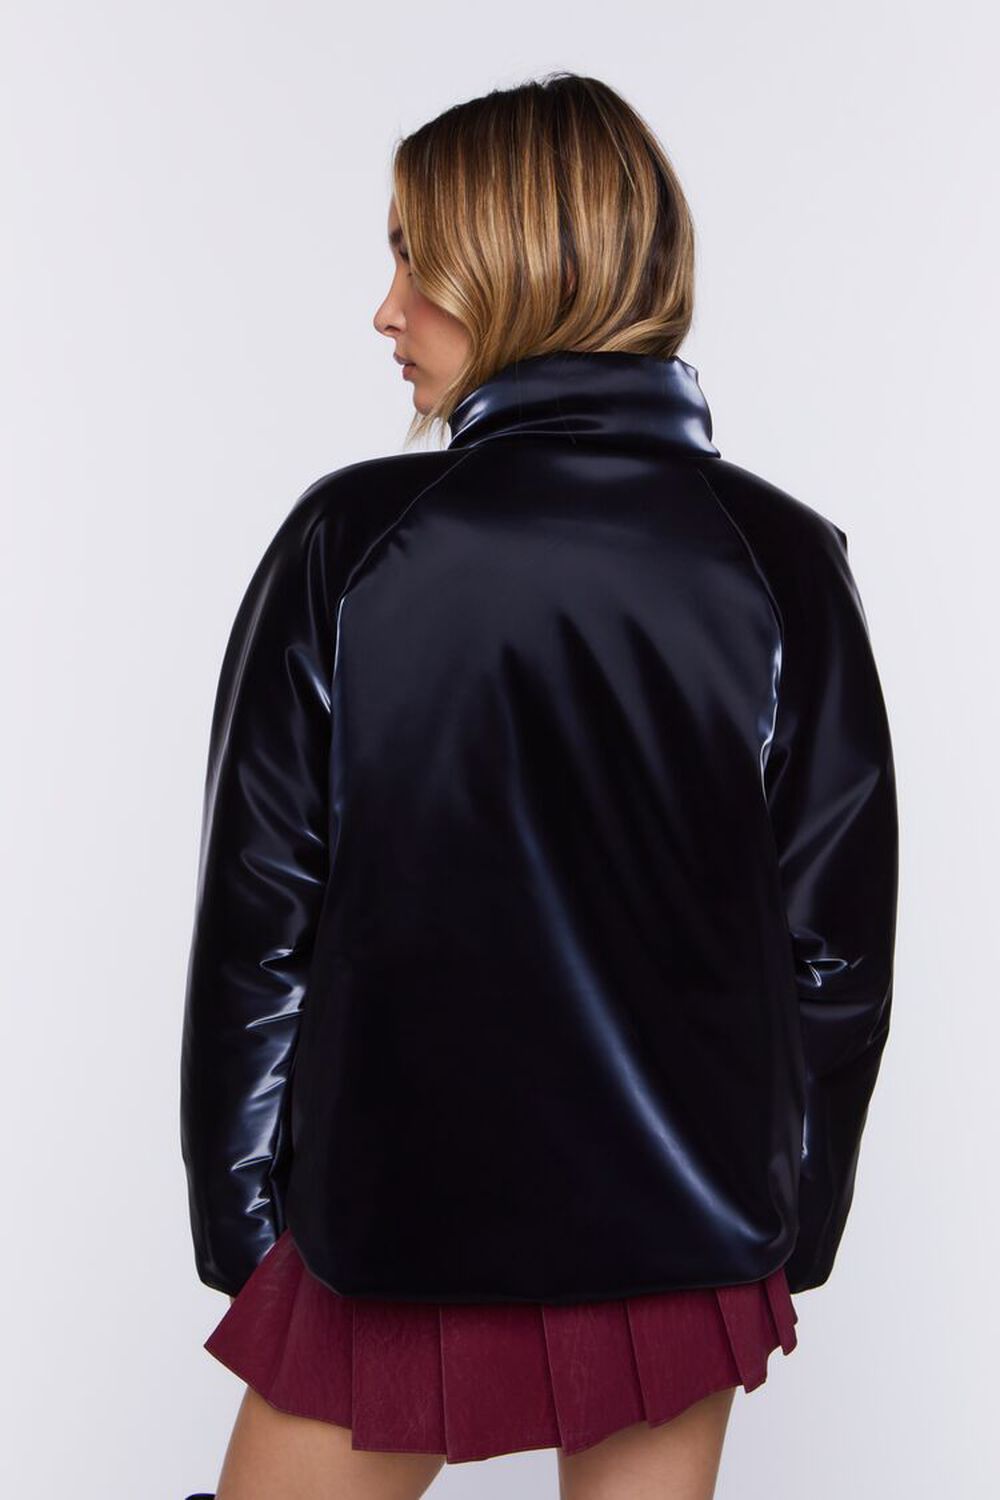 BLACK Open-Front Puffer Jacket, image 3